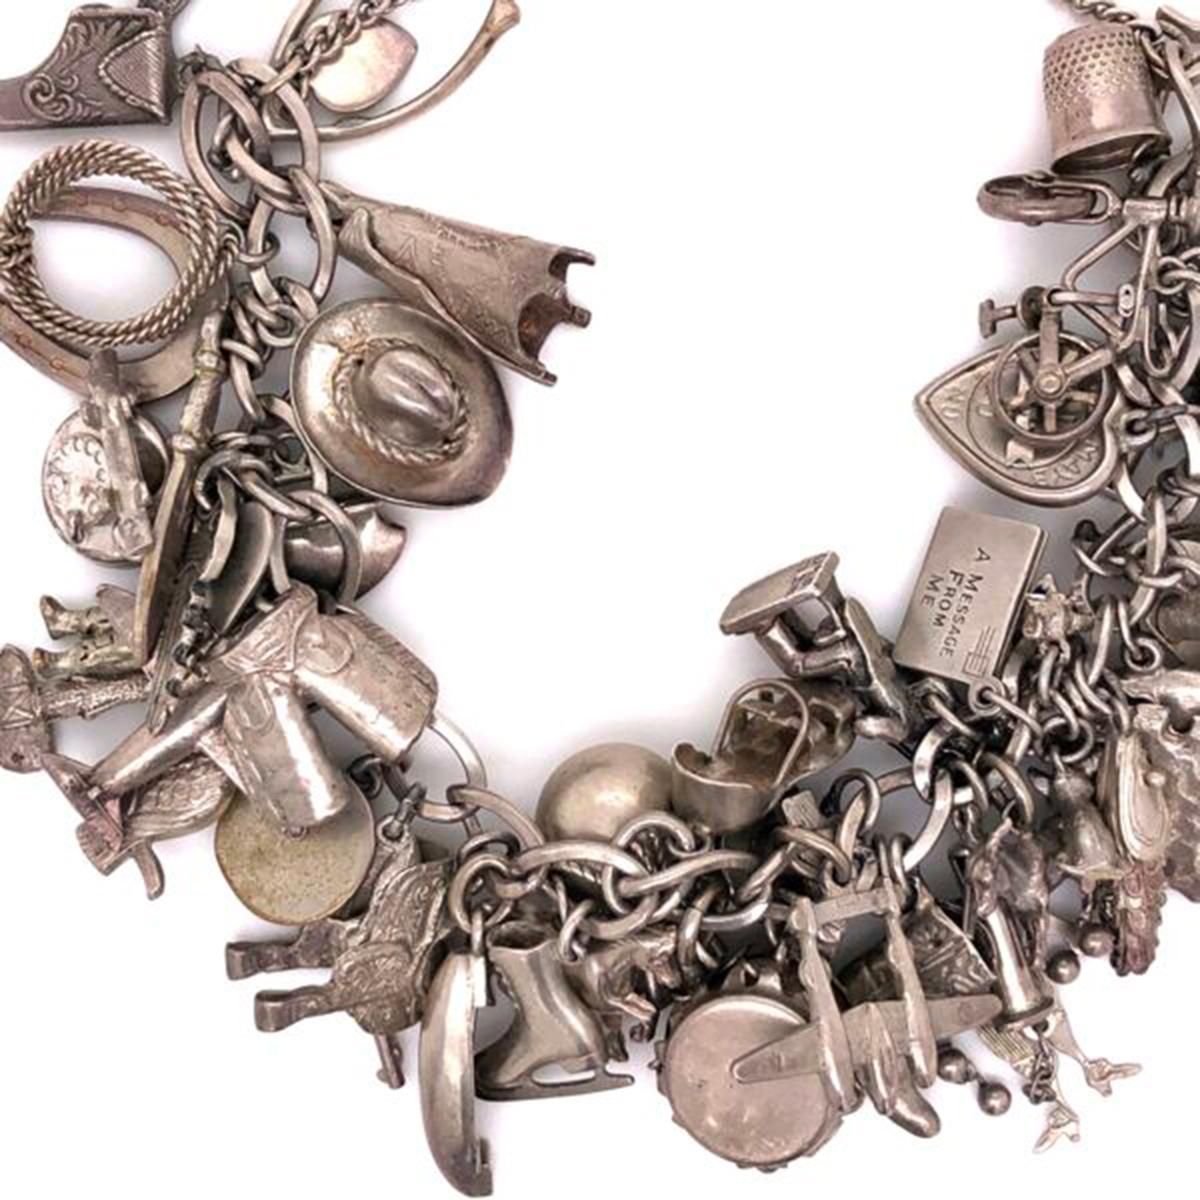 Modernist Vintage 50 Piece Sterling Silver Charm Bracelet Great Estate Jewelry Find